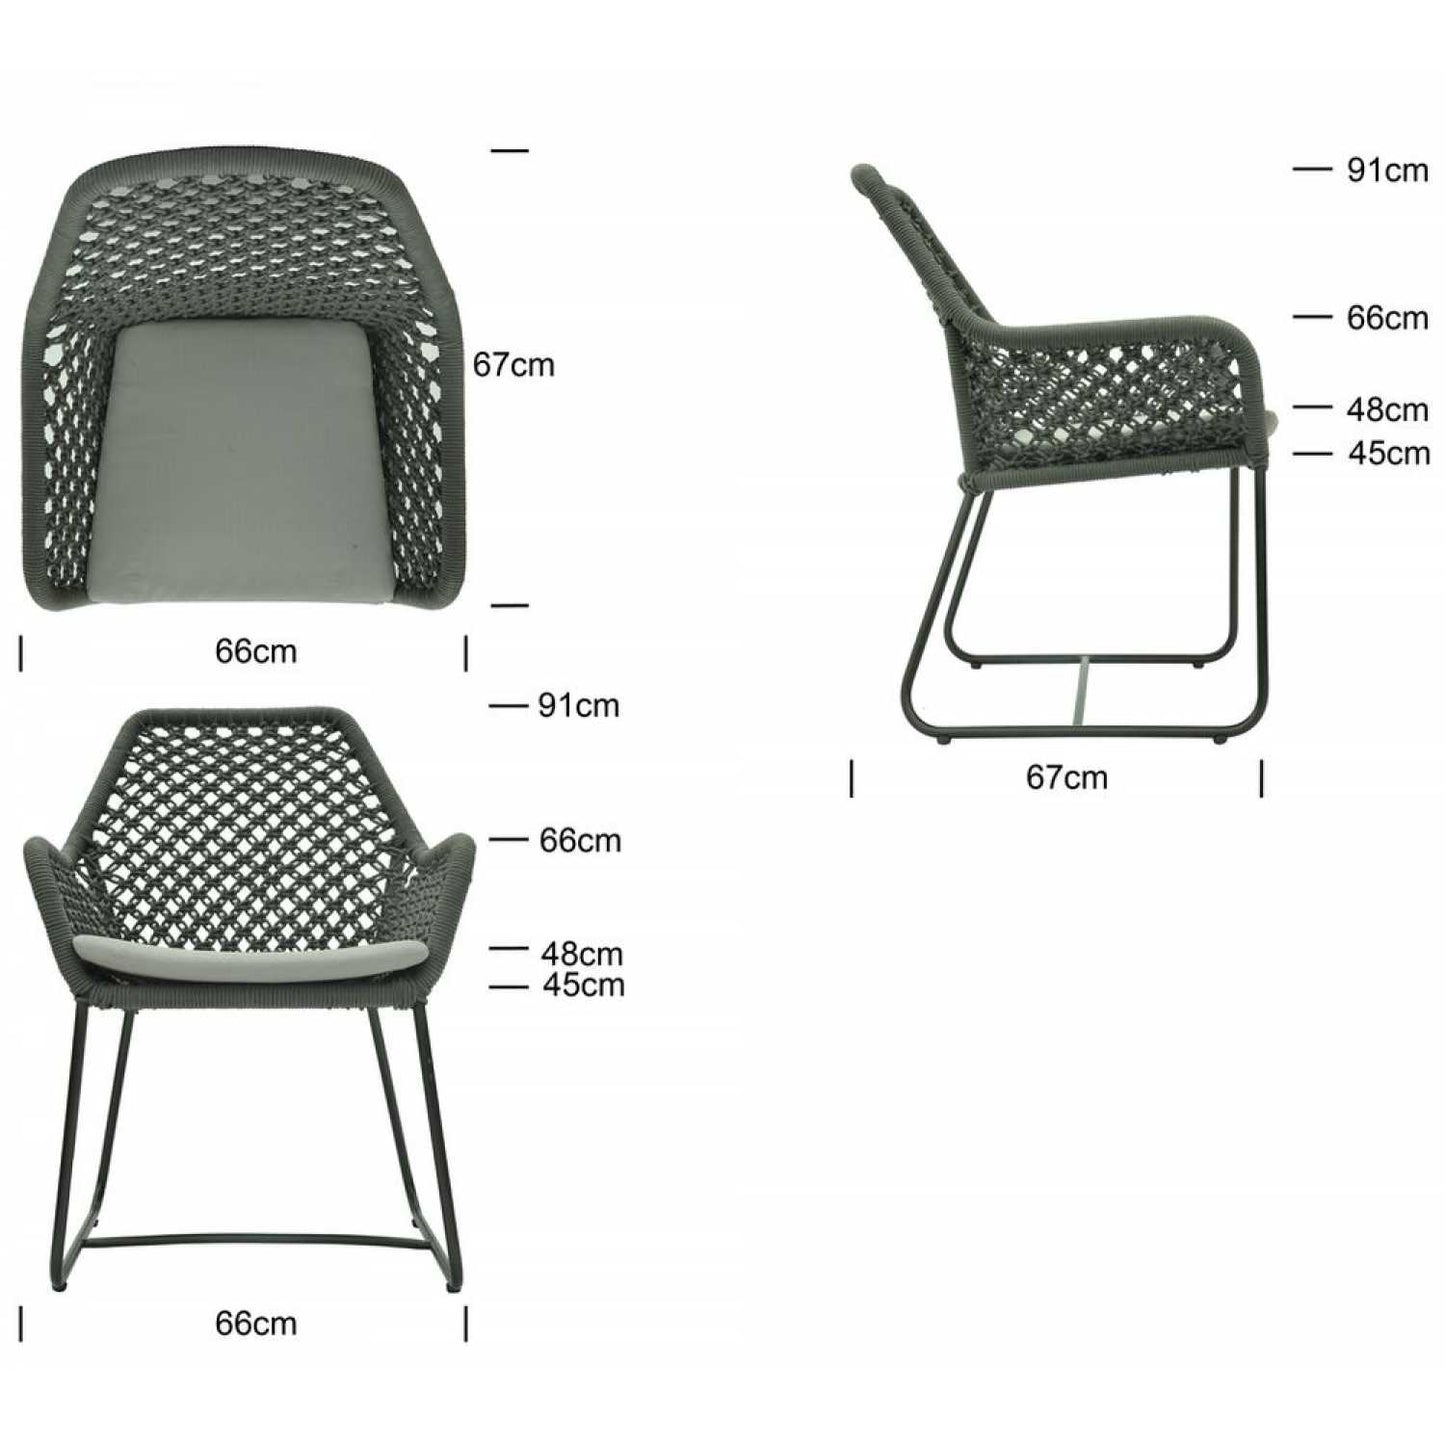 Kona Dining Chair - PadioLiving - Kona Dining Chair - Outdoor Dining Chair - PadioLiving